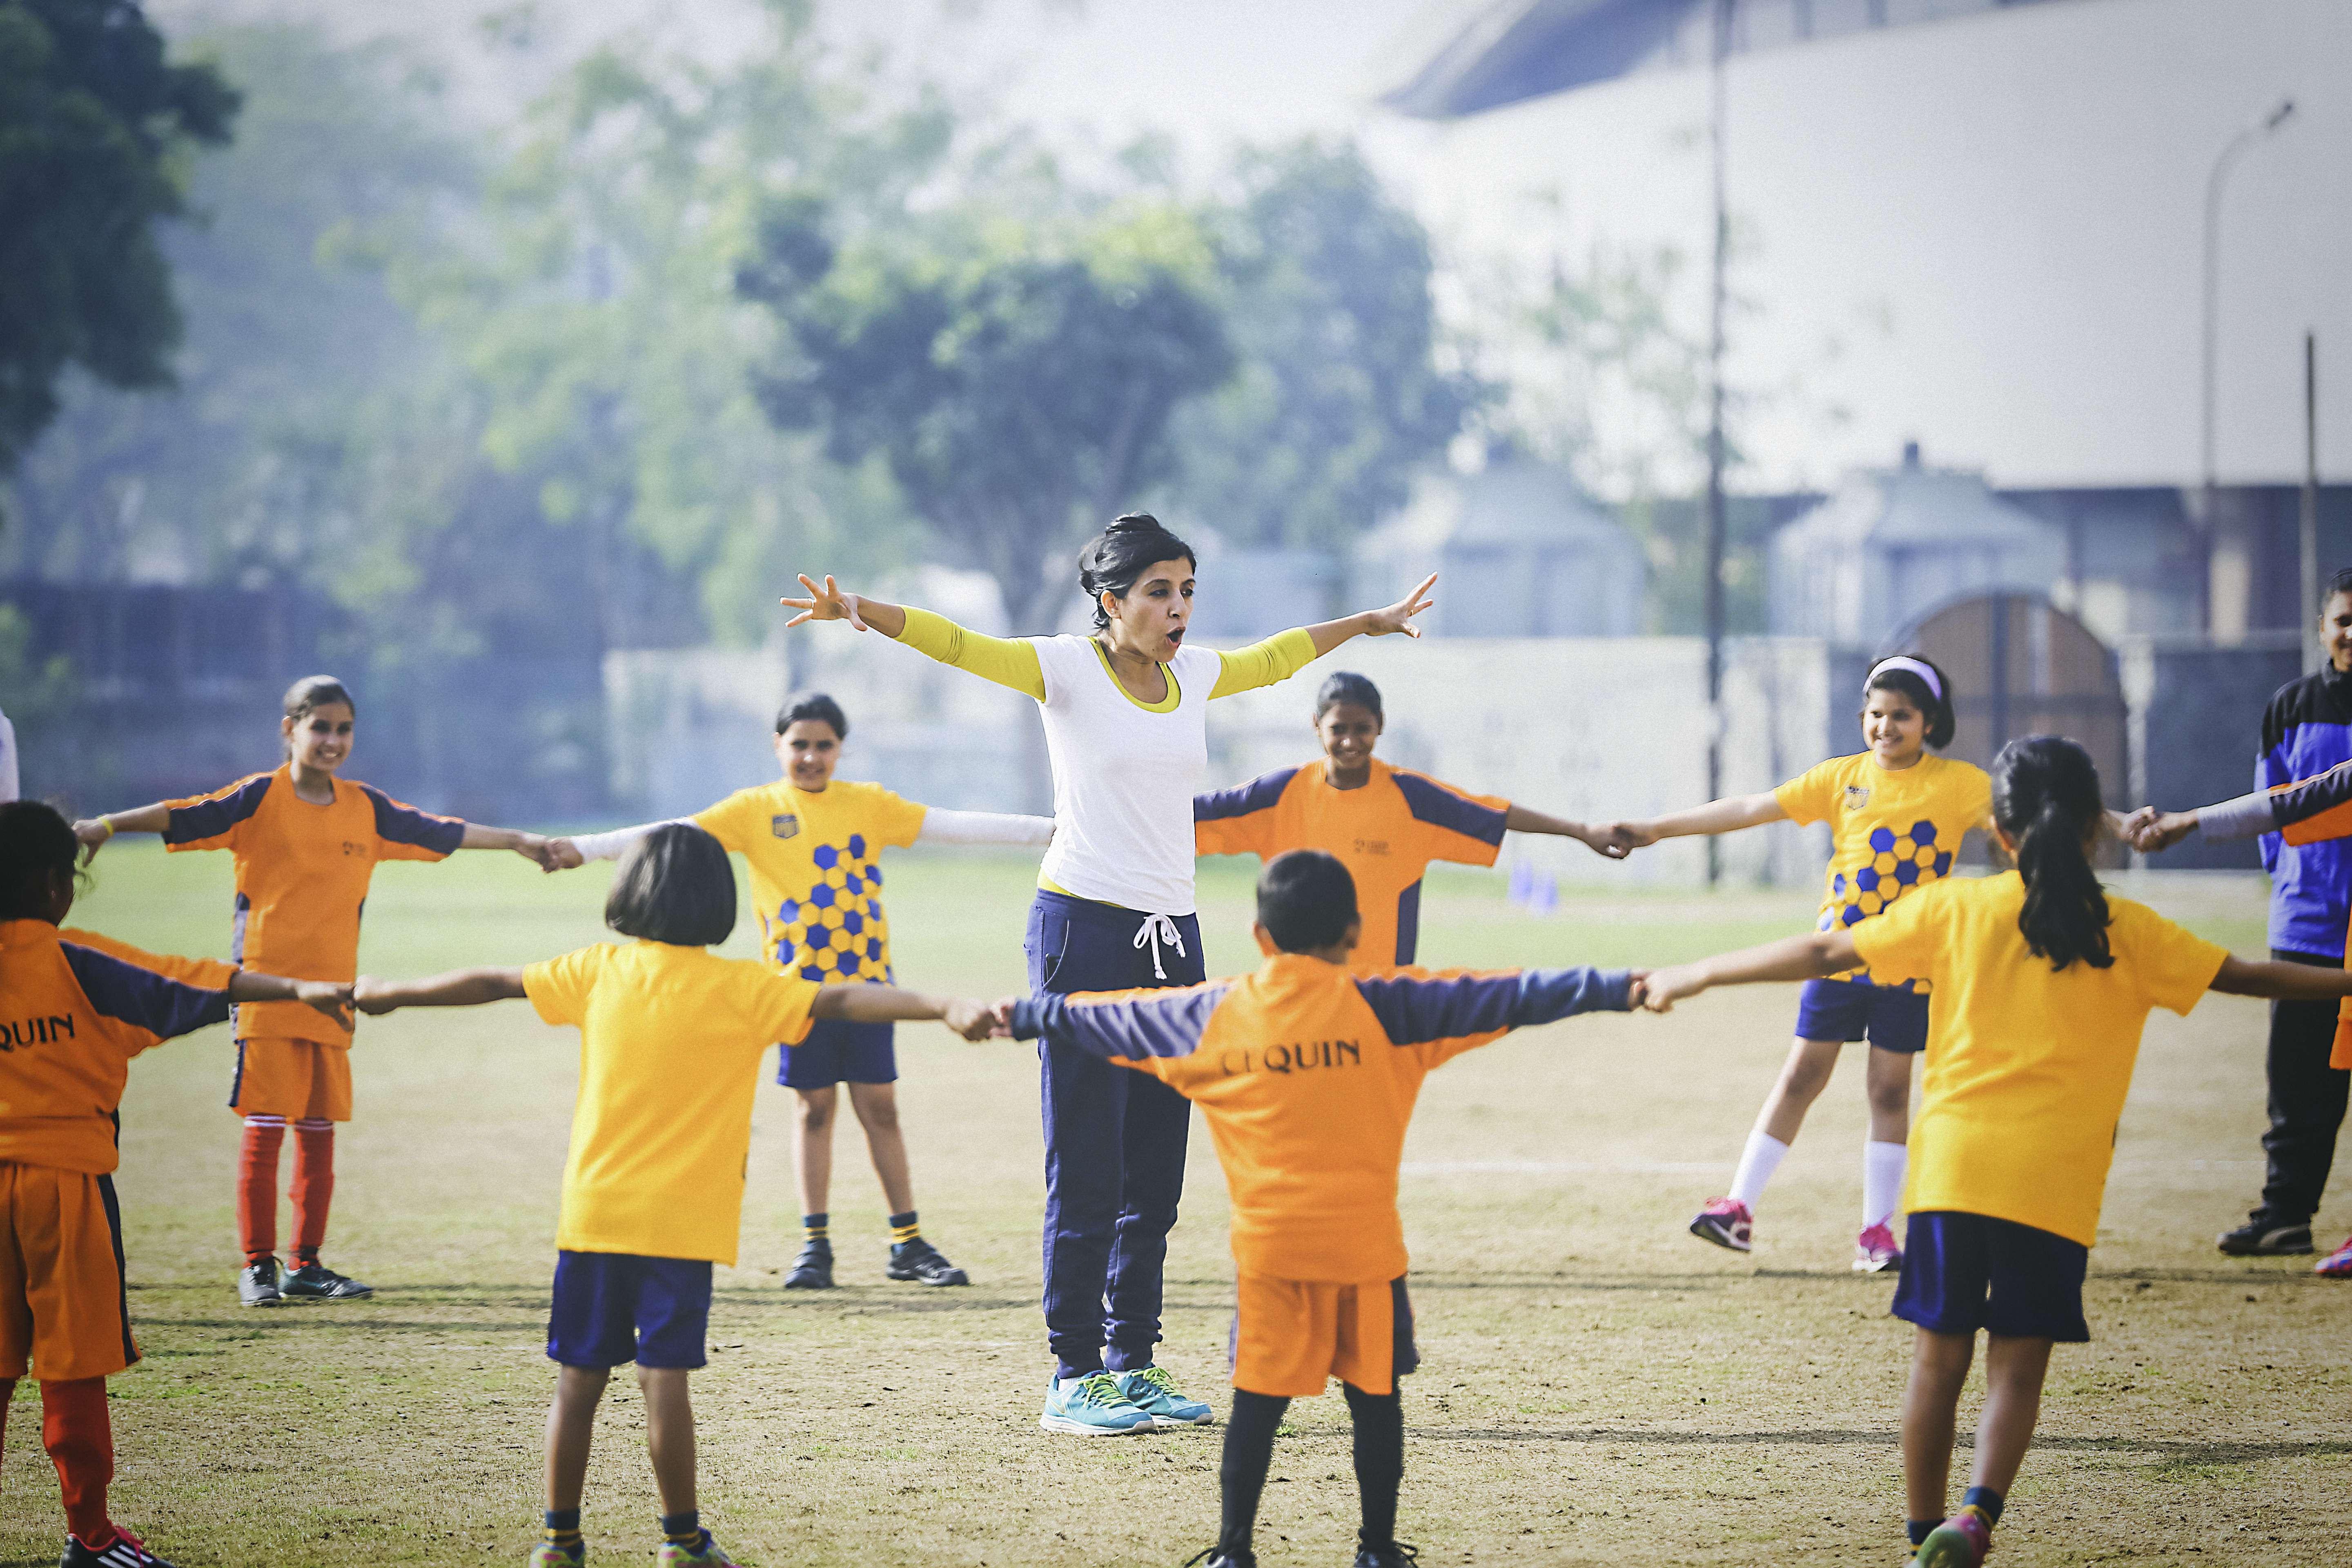 Nupur-Richard- The Art of Sport- Delhi- startup-empowering girls though sports